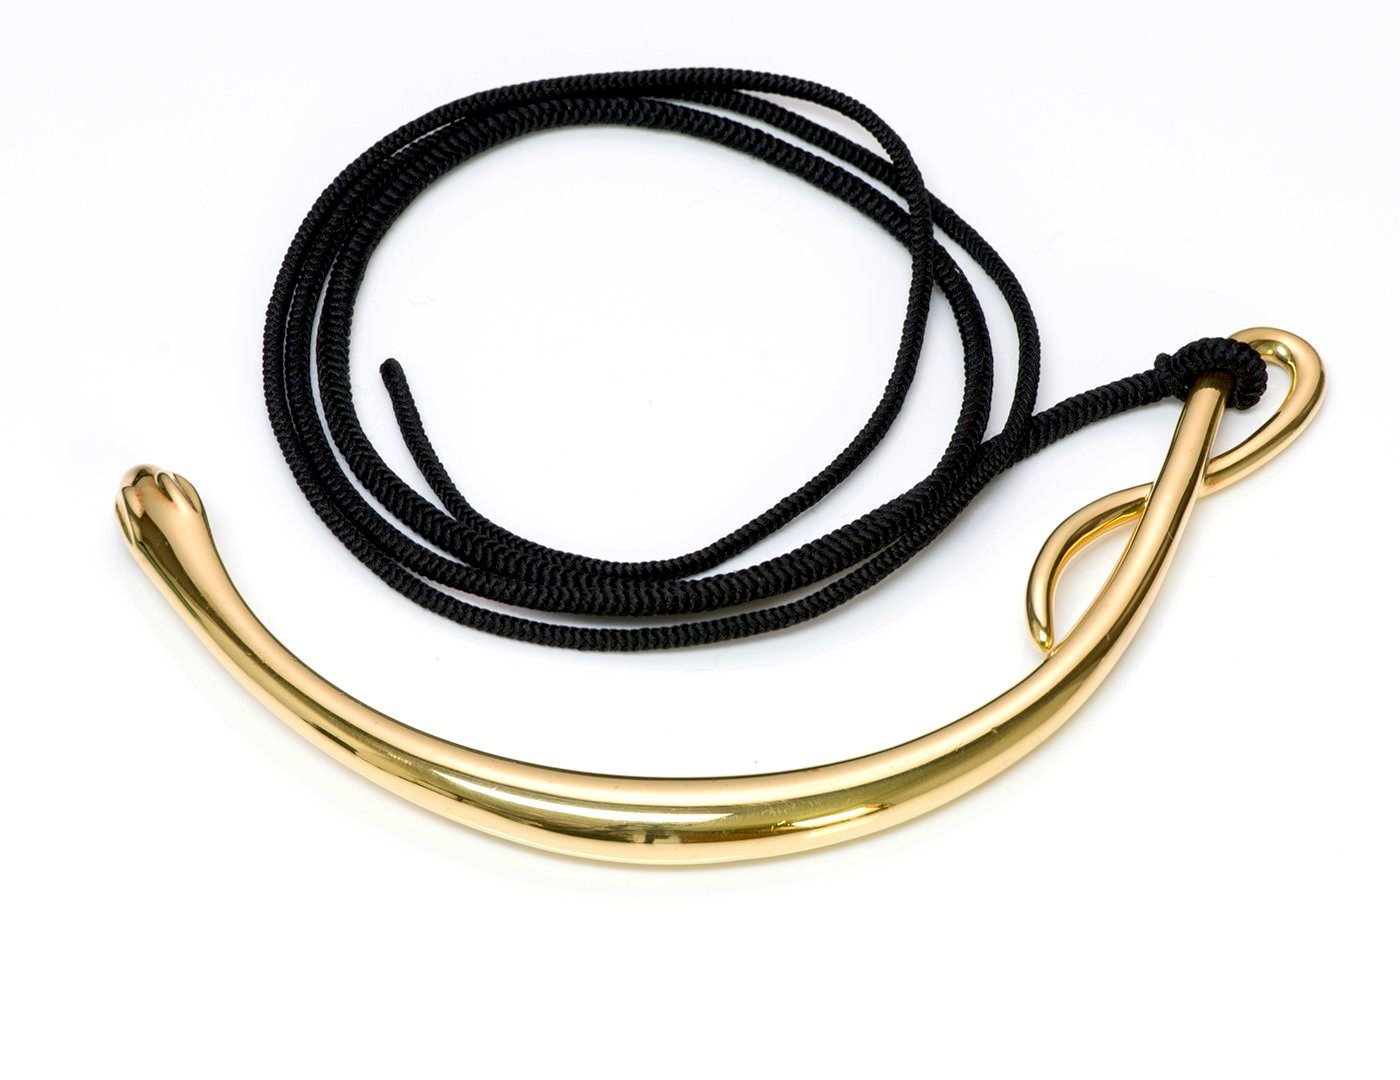 Tiffany & Co. Elsa Peretti 24K Gold Snake Necklace